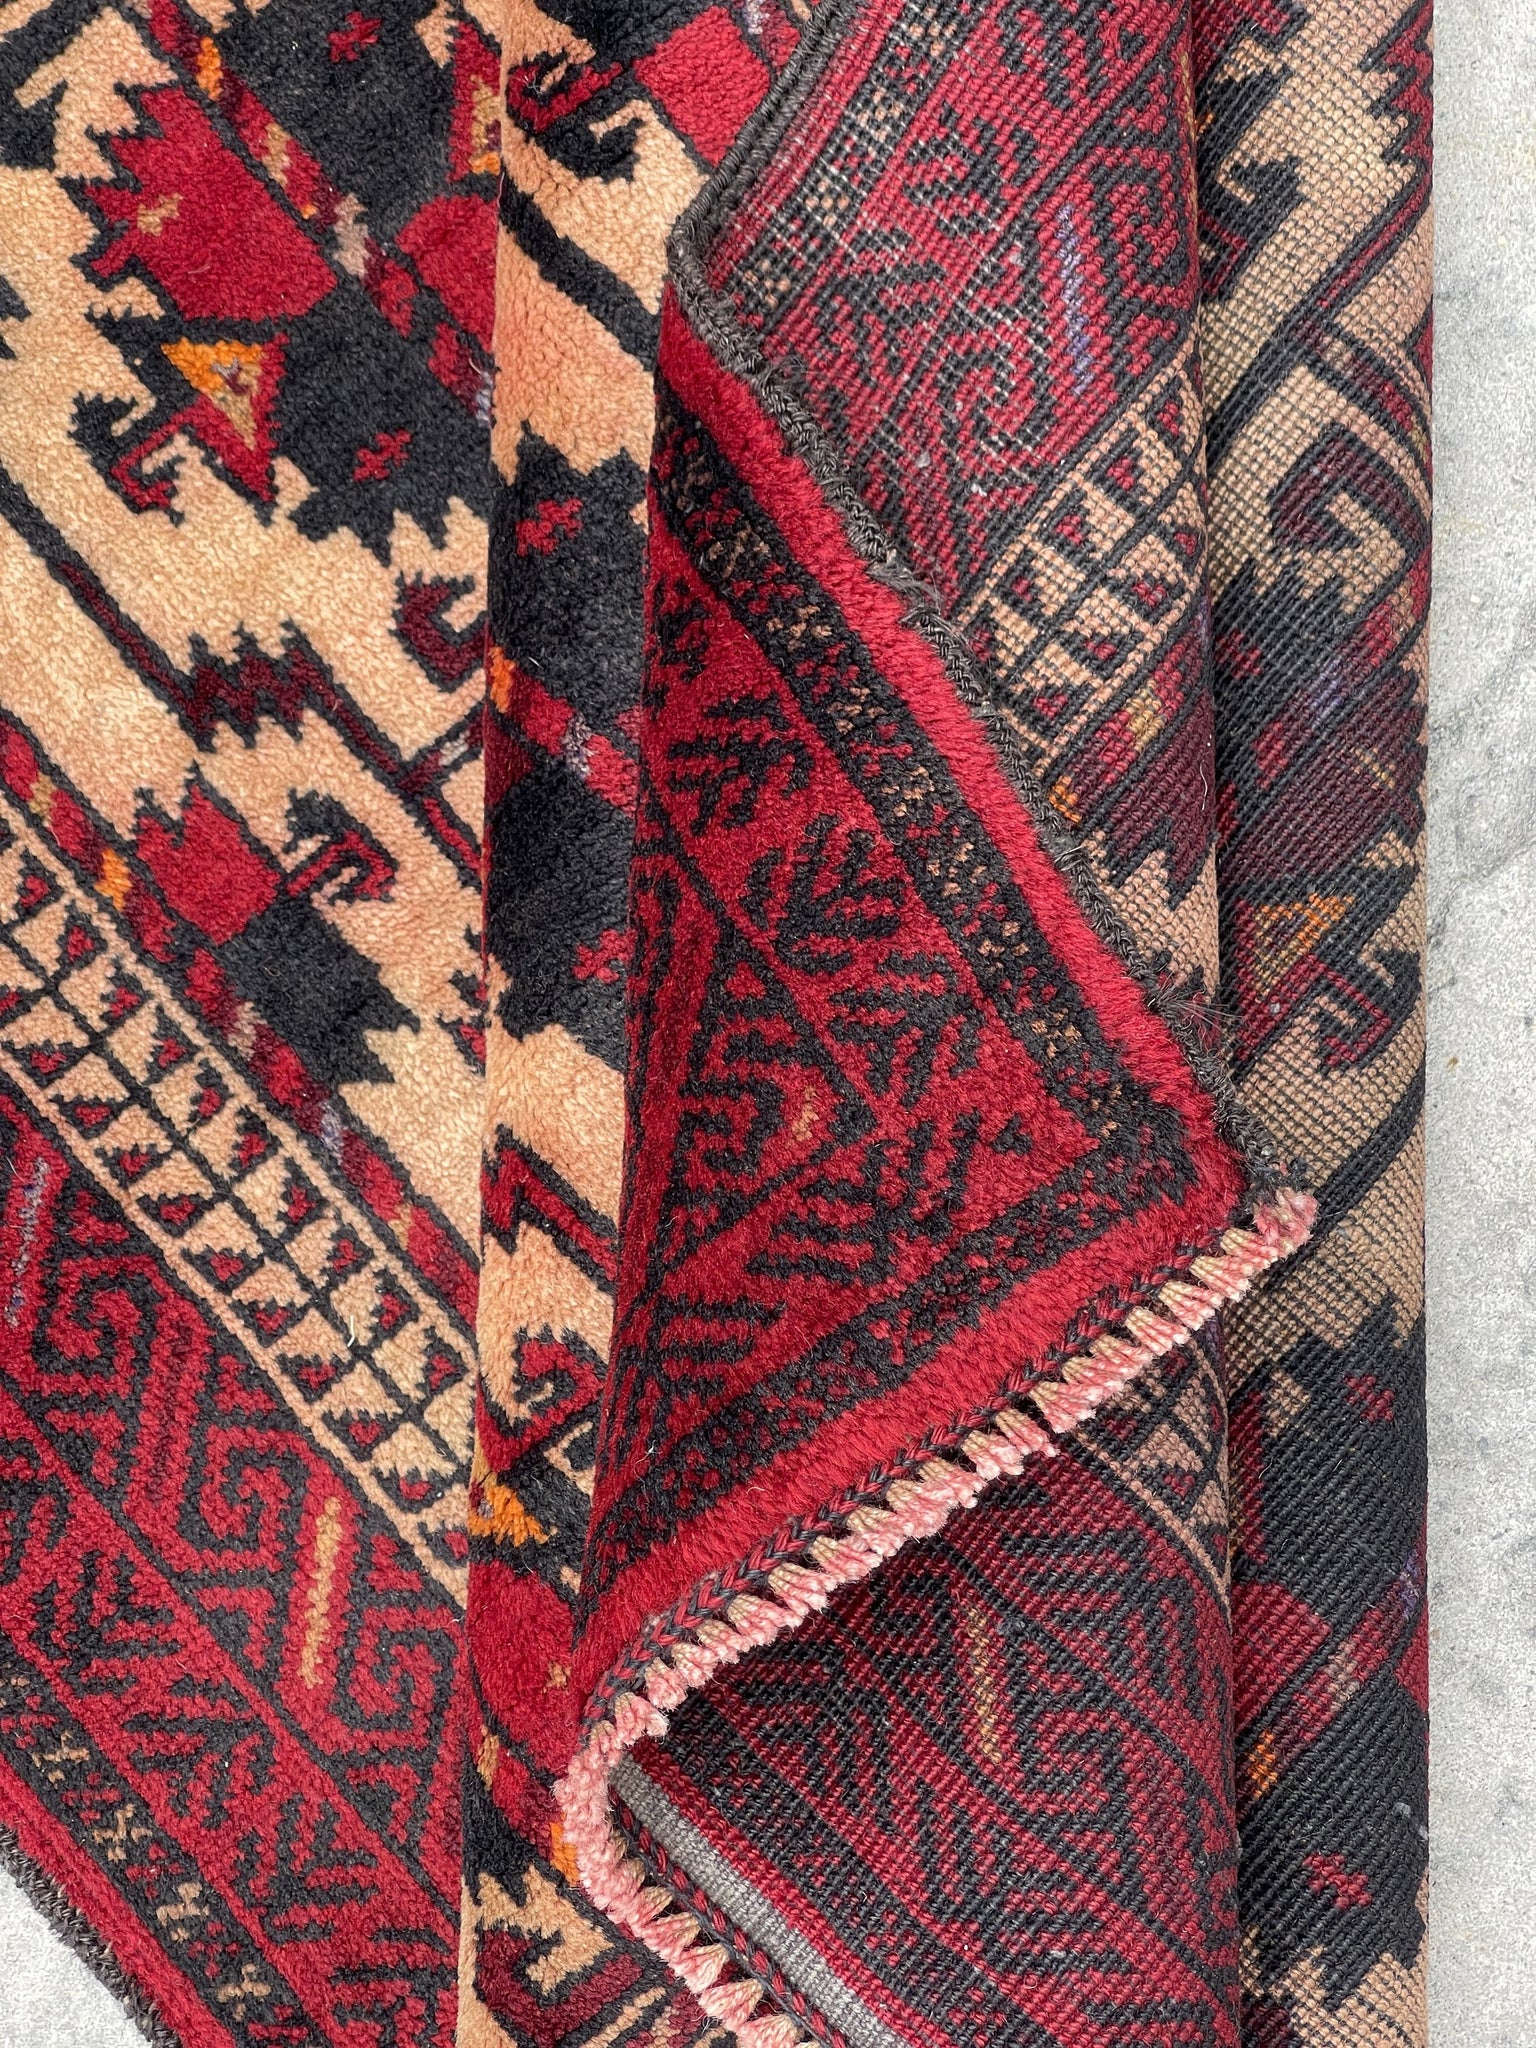 3x5 (90x150) Handmade Vintage Afghan Rug | Nomadic Baluch | Crimson Red Beige Black Orange | Boho Bohemian Tribal Turkish Moroccan Wool